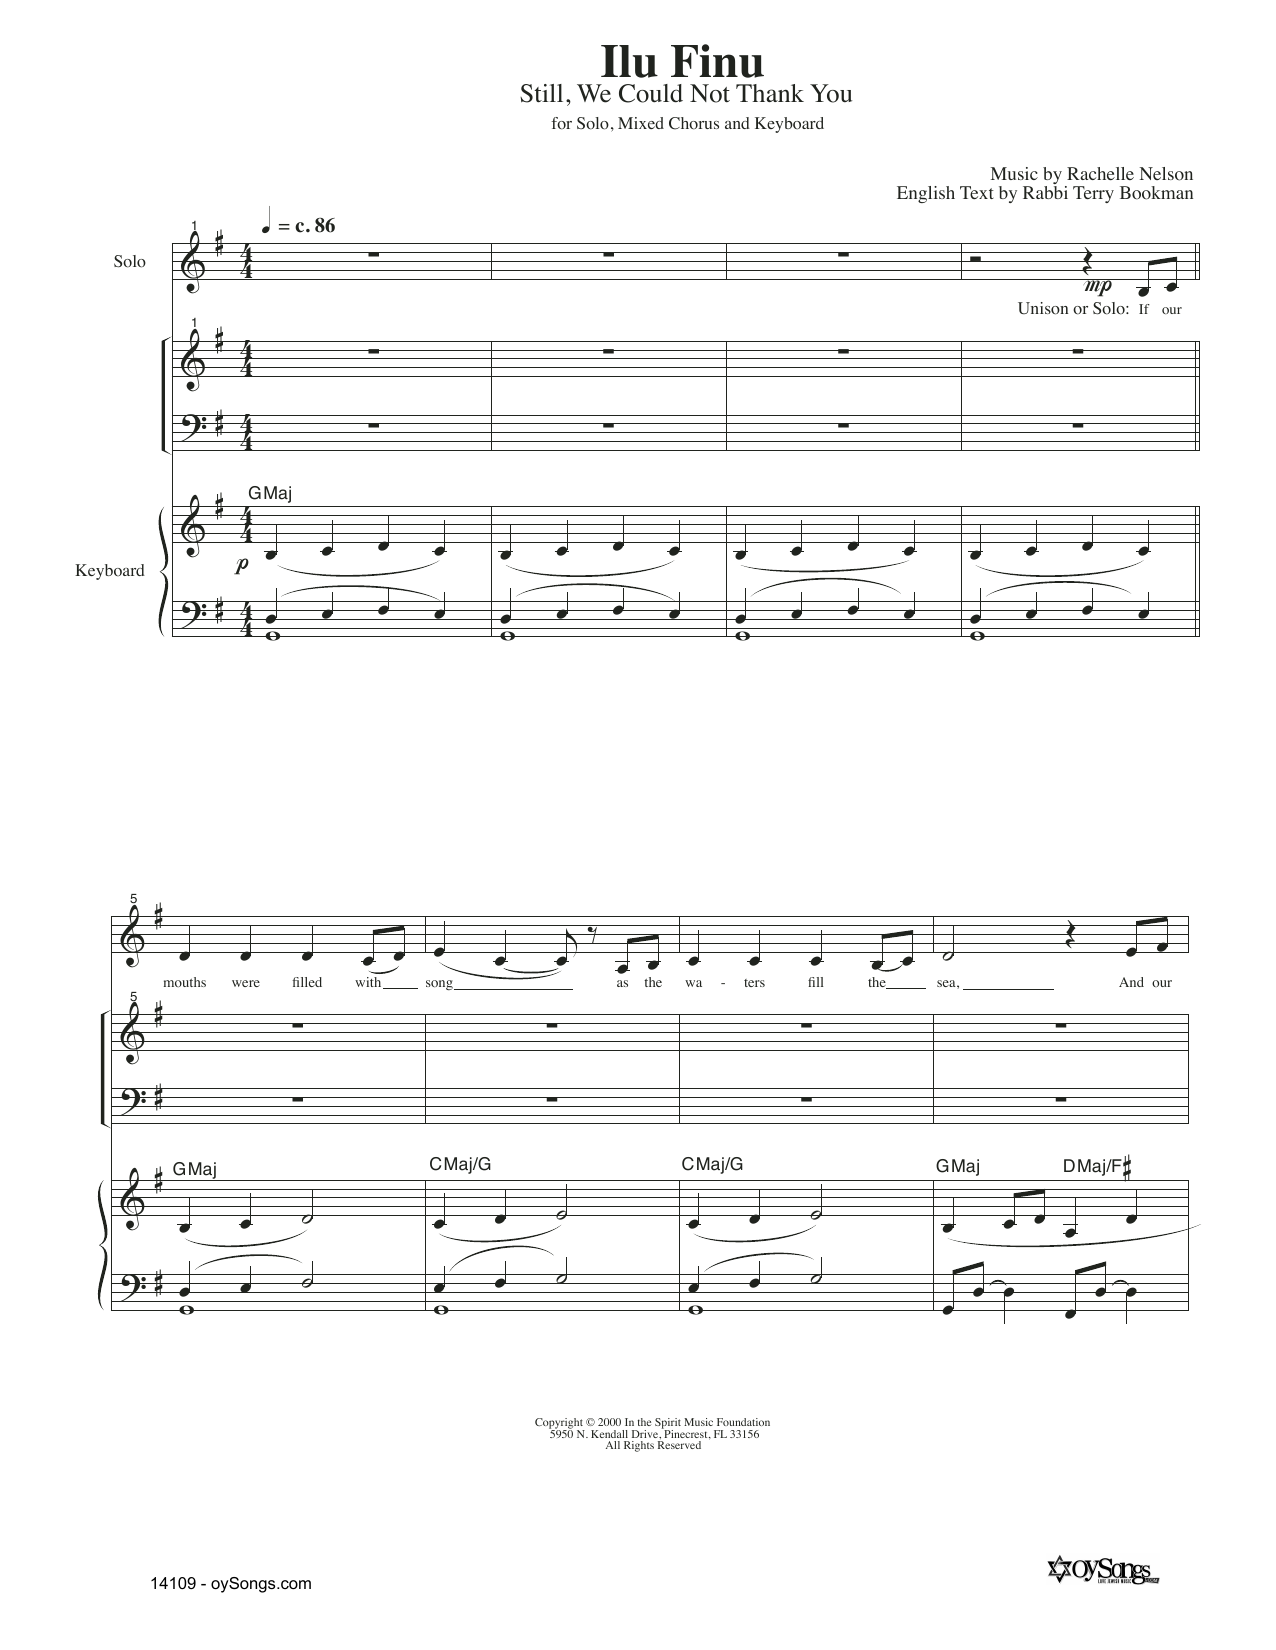 Rachelle Nelson Ilu Finu sheet music notes and chords arranged for SATB Choir